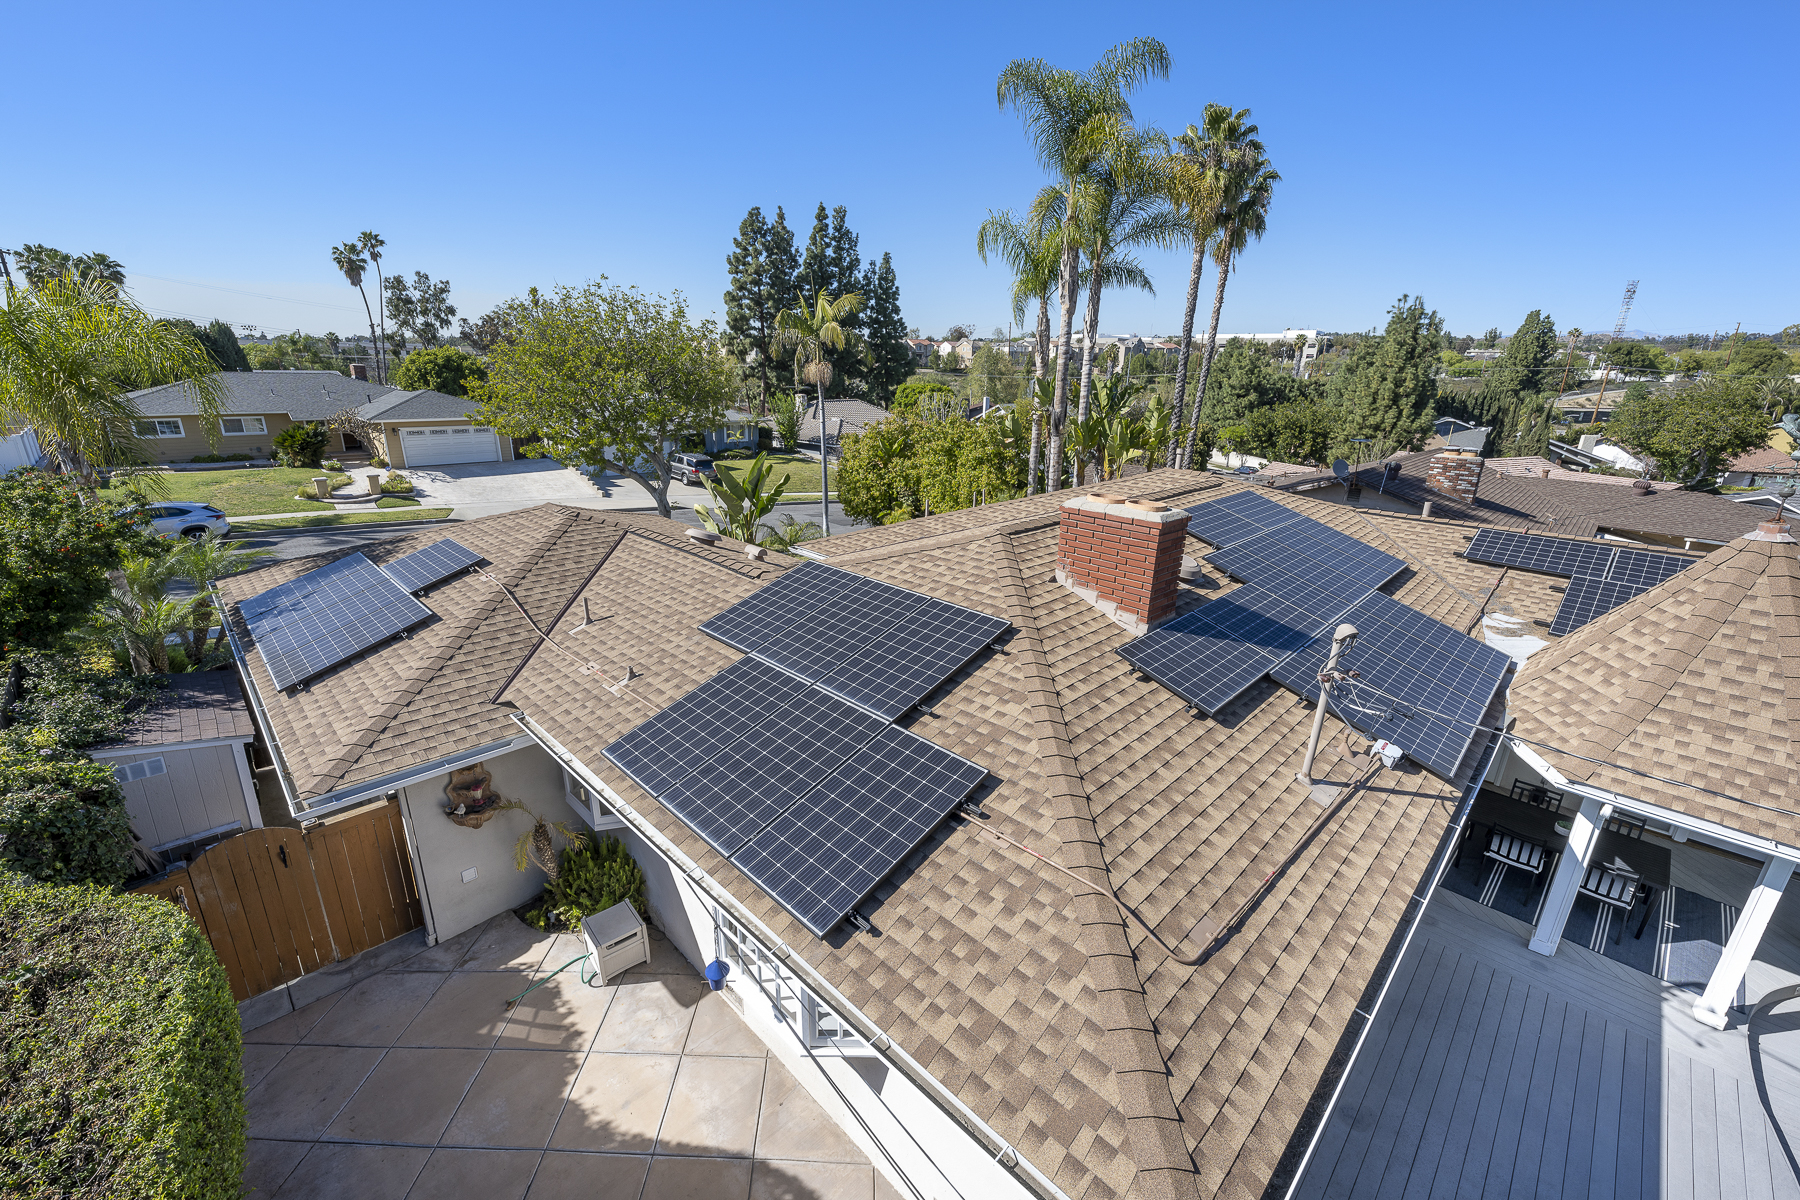 806 N. Adlena Drive, Fullerton, CA 92833: Aerial view of roof, solar panels.